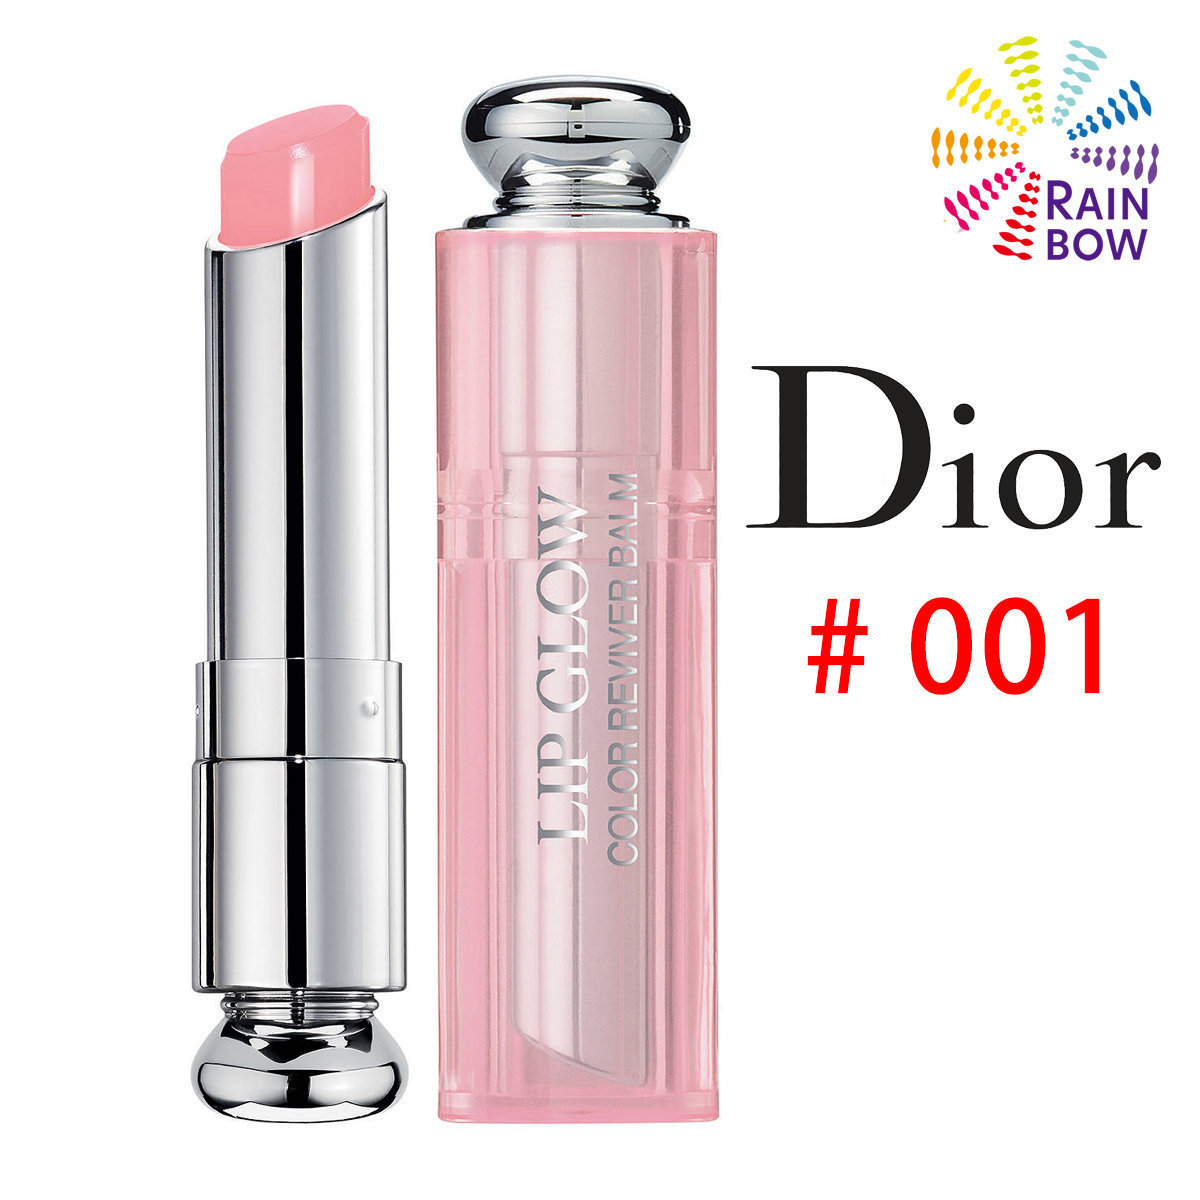 dior addict lip glow 001 pink